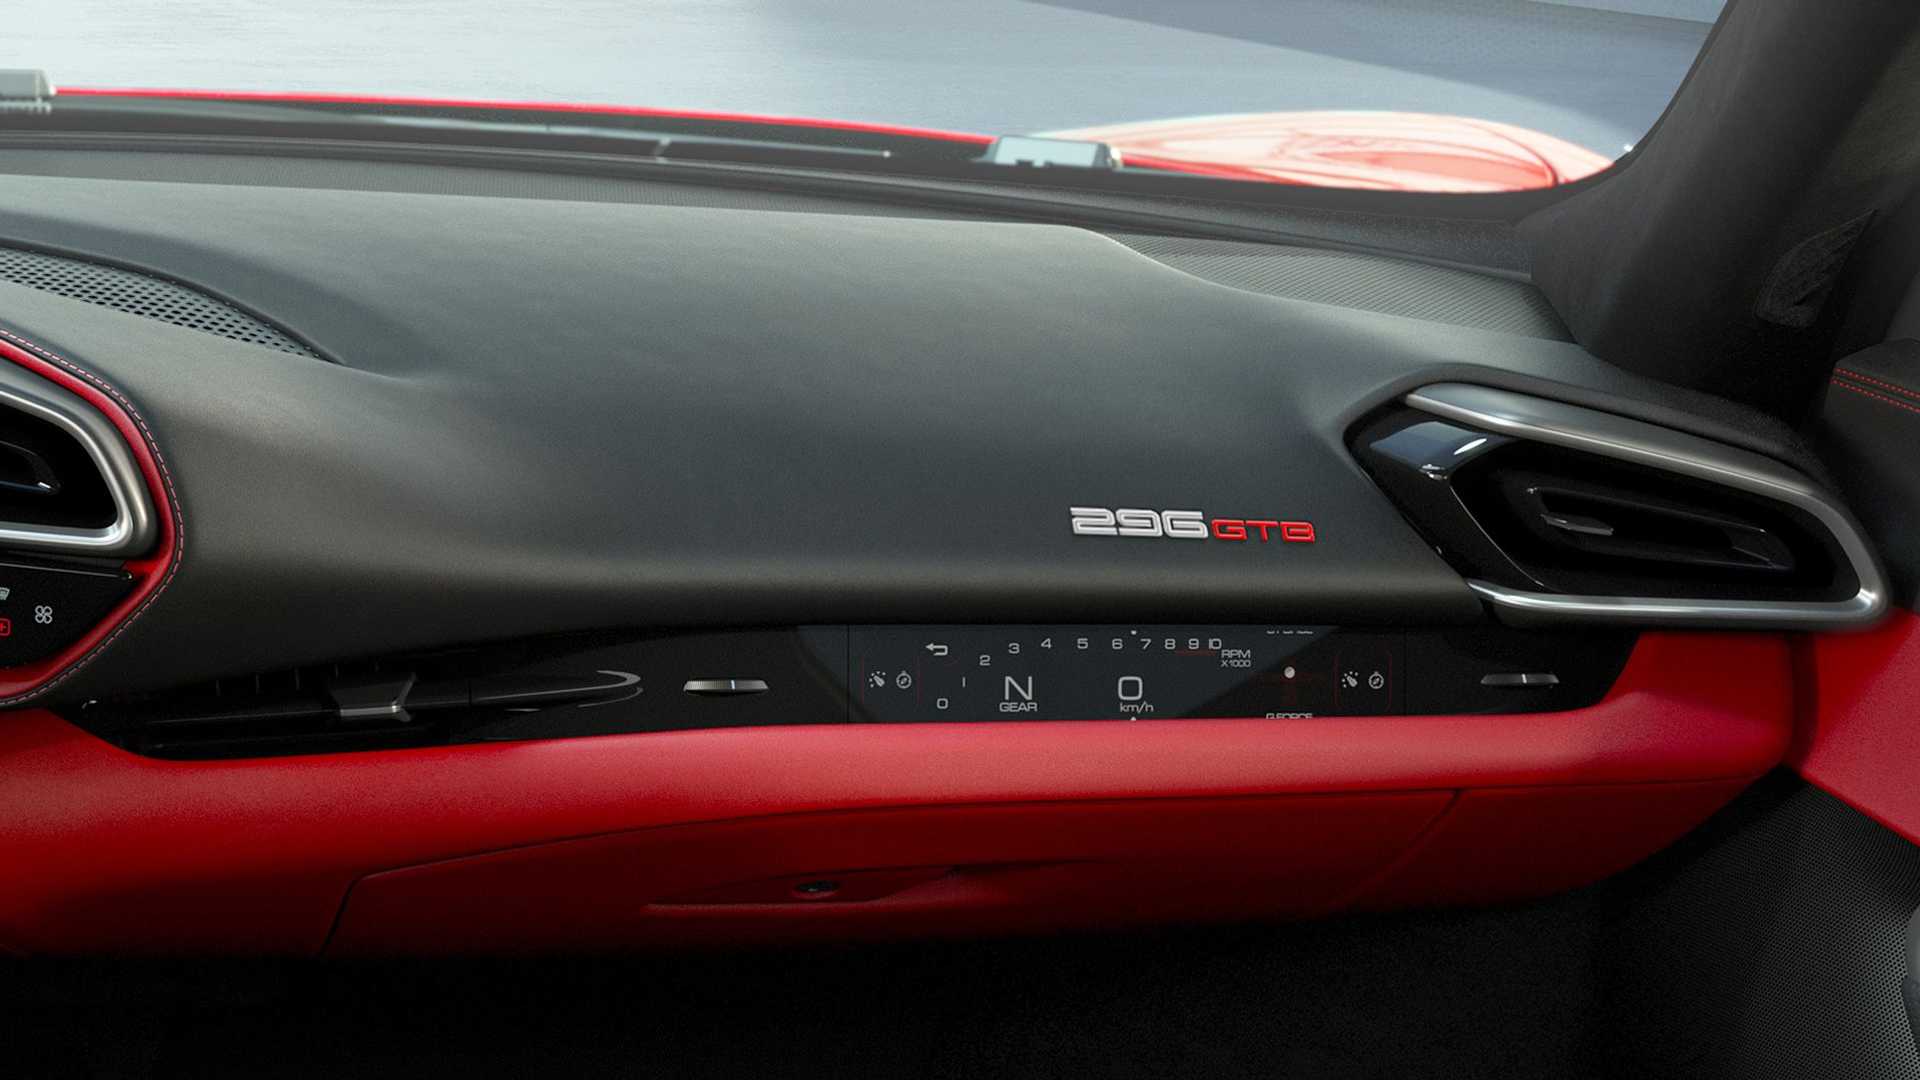 The Best 16 Ferrari 296 Gtb Interior